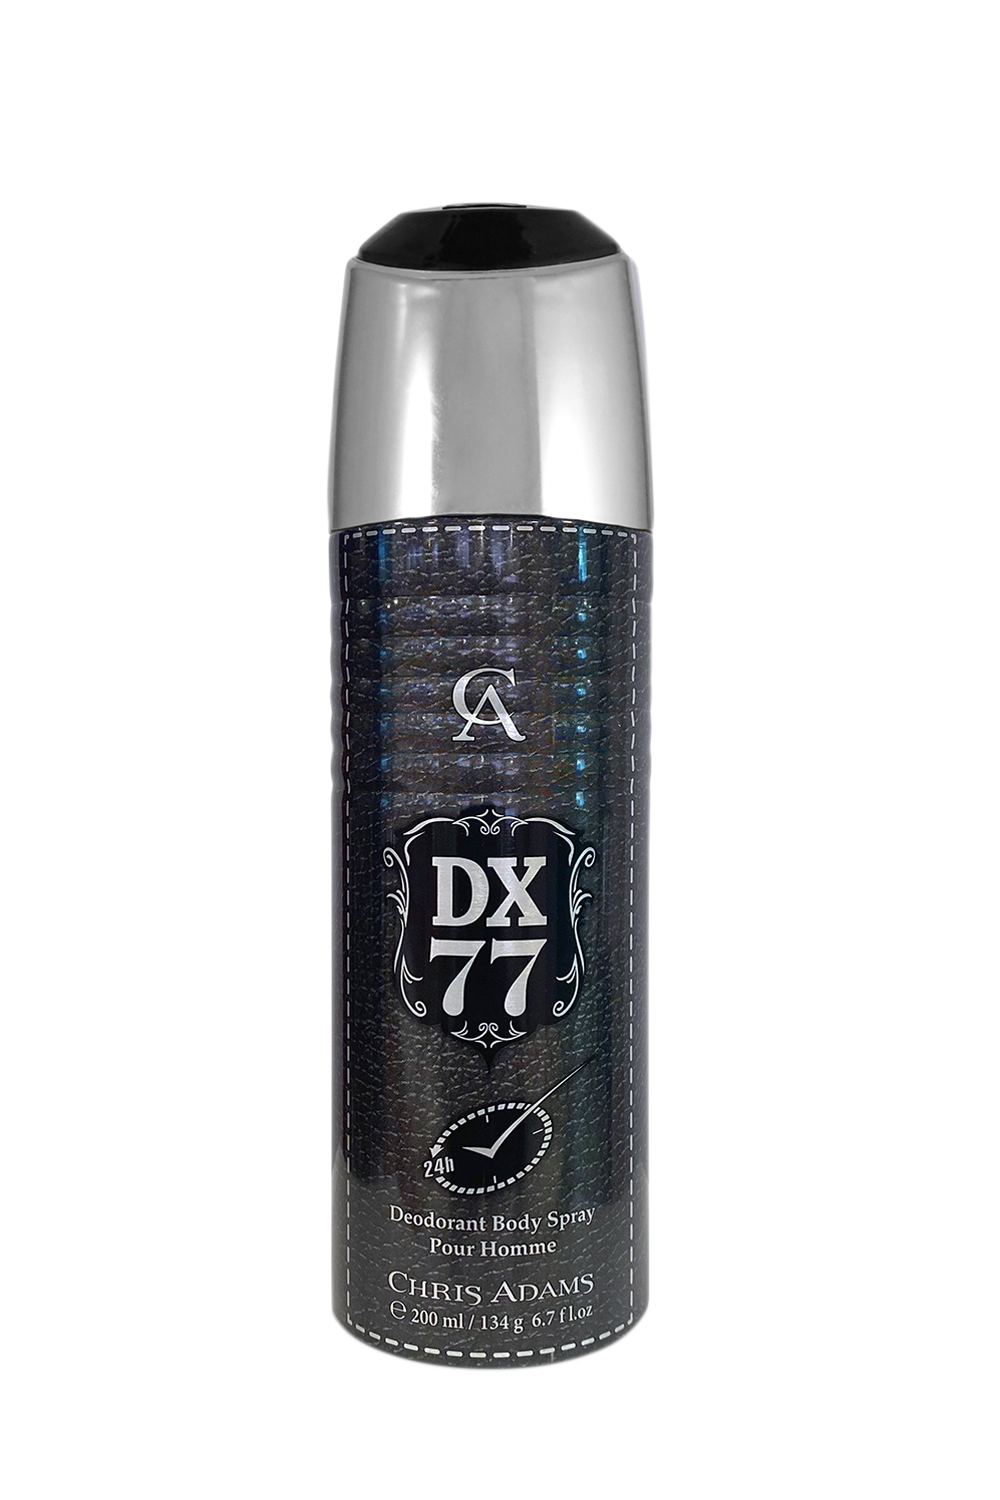 Confidently fresh DX 77 Deodorant - Pour Homme 200 mL.